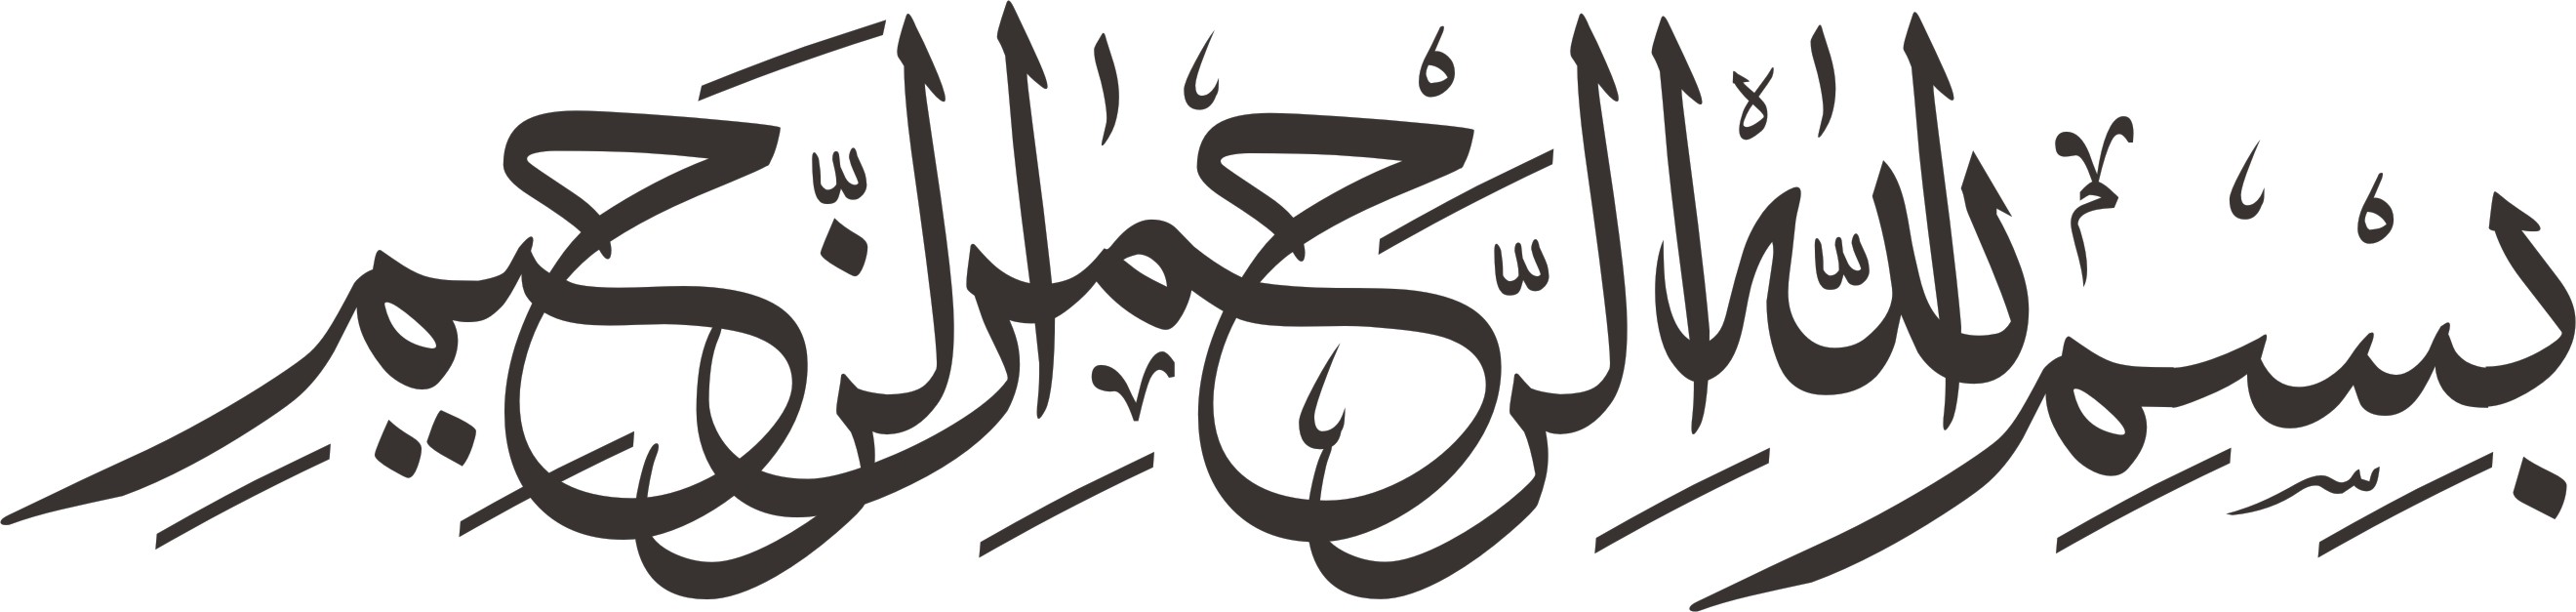 Allah Islamic Calligraphy Home Decor Allah Printable Islamic